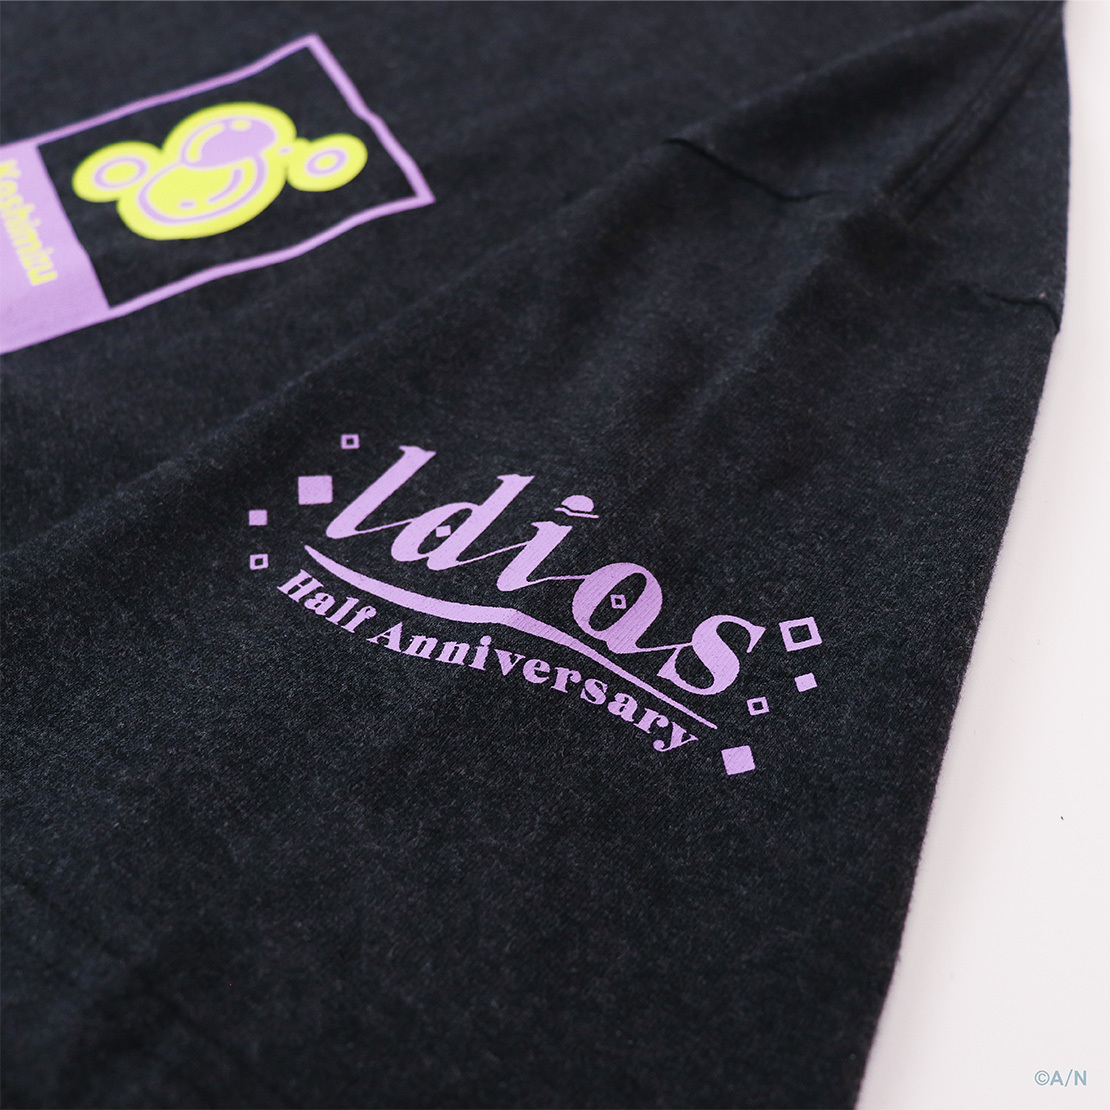 【Idios Half ANNIVERSARY】Tシャツ